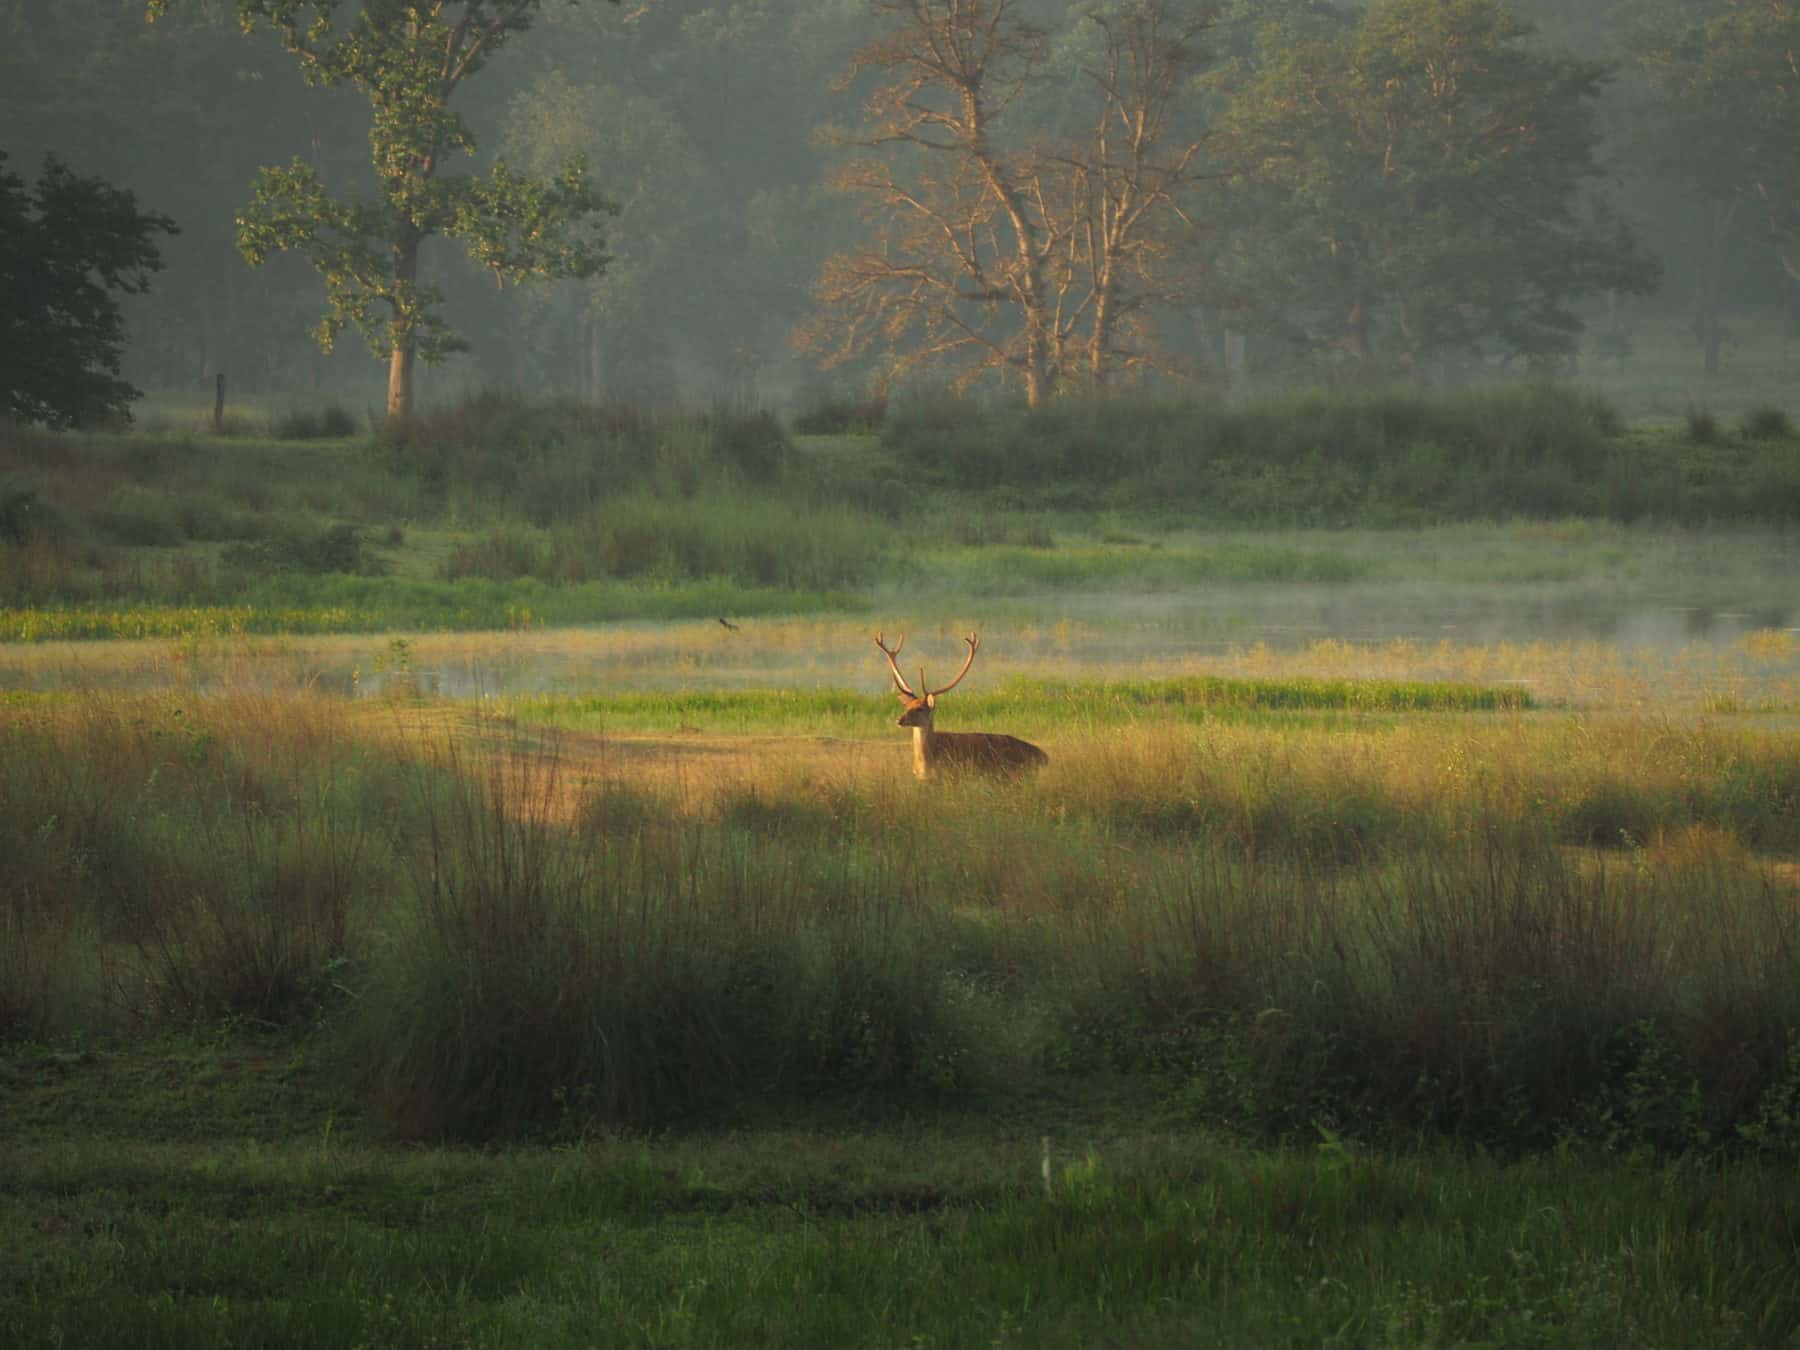 Deer in Kanha National Park